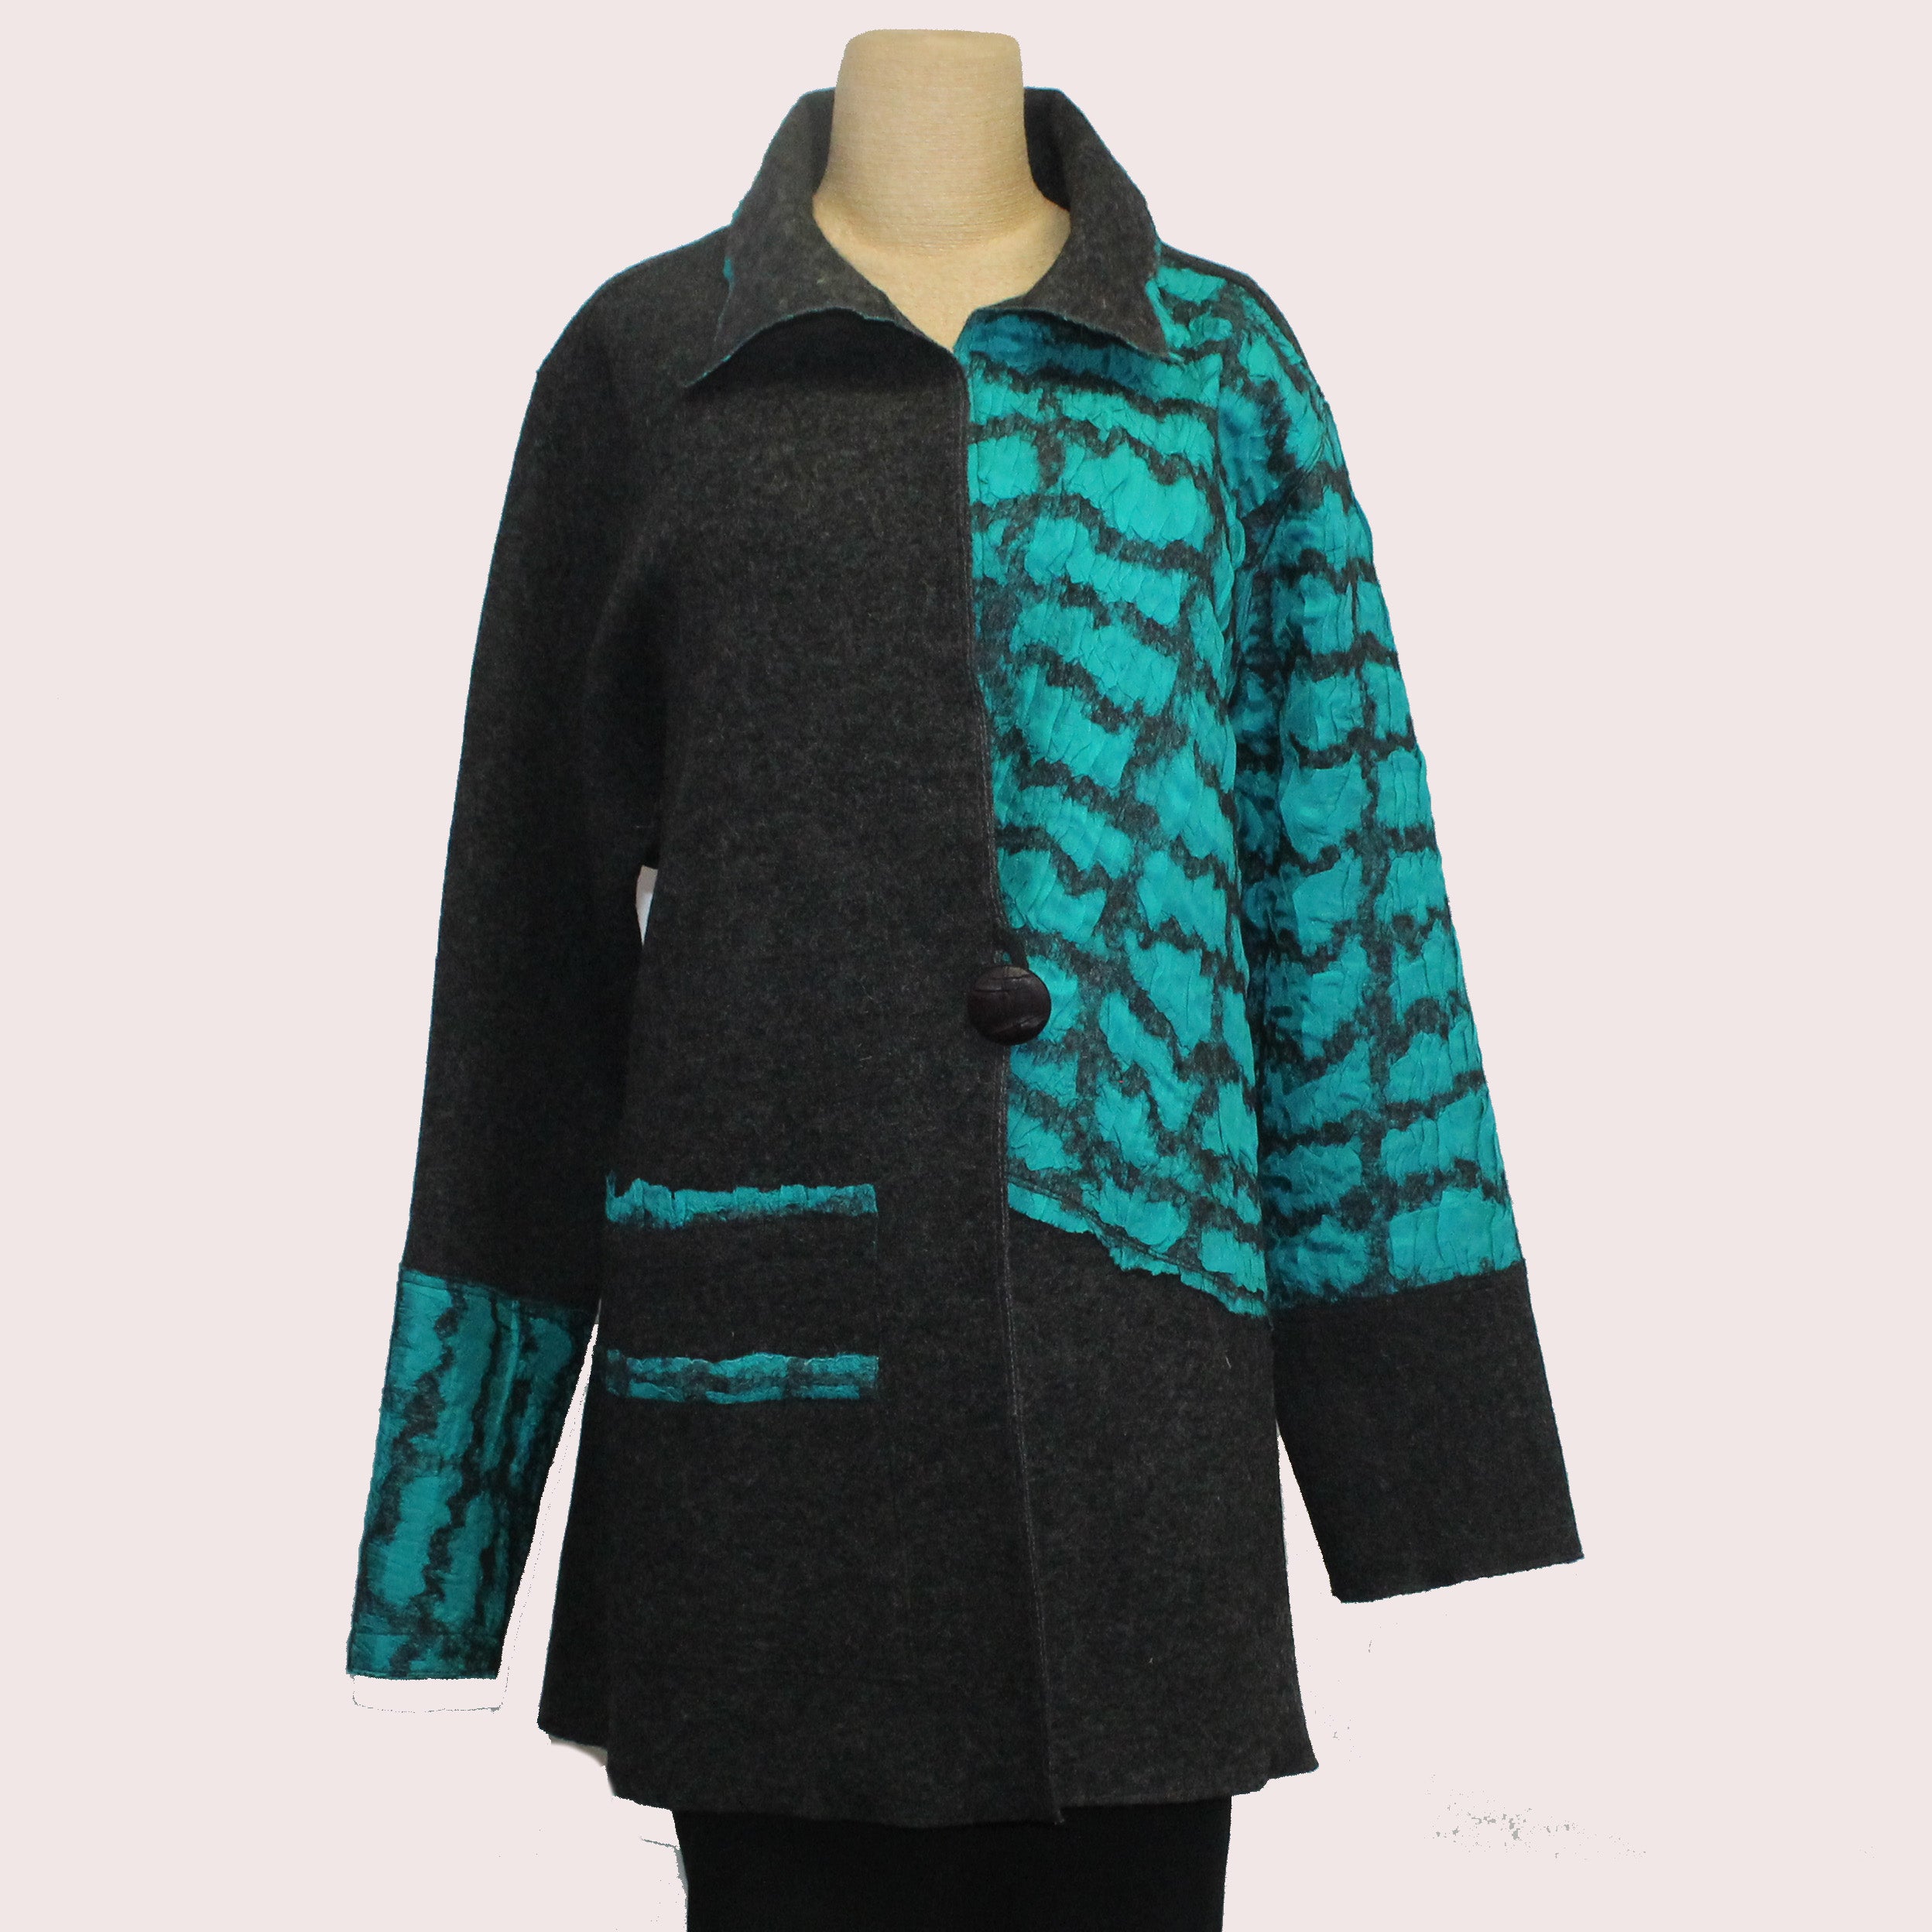 Maggy Pavlou Jacket, Turquoise/Charcoal, L/XL